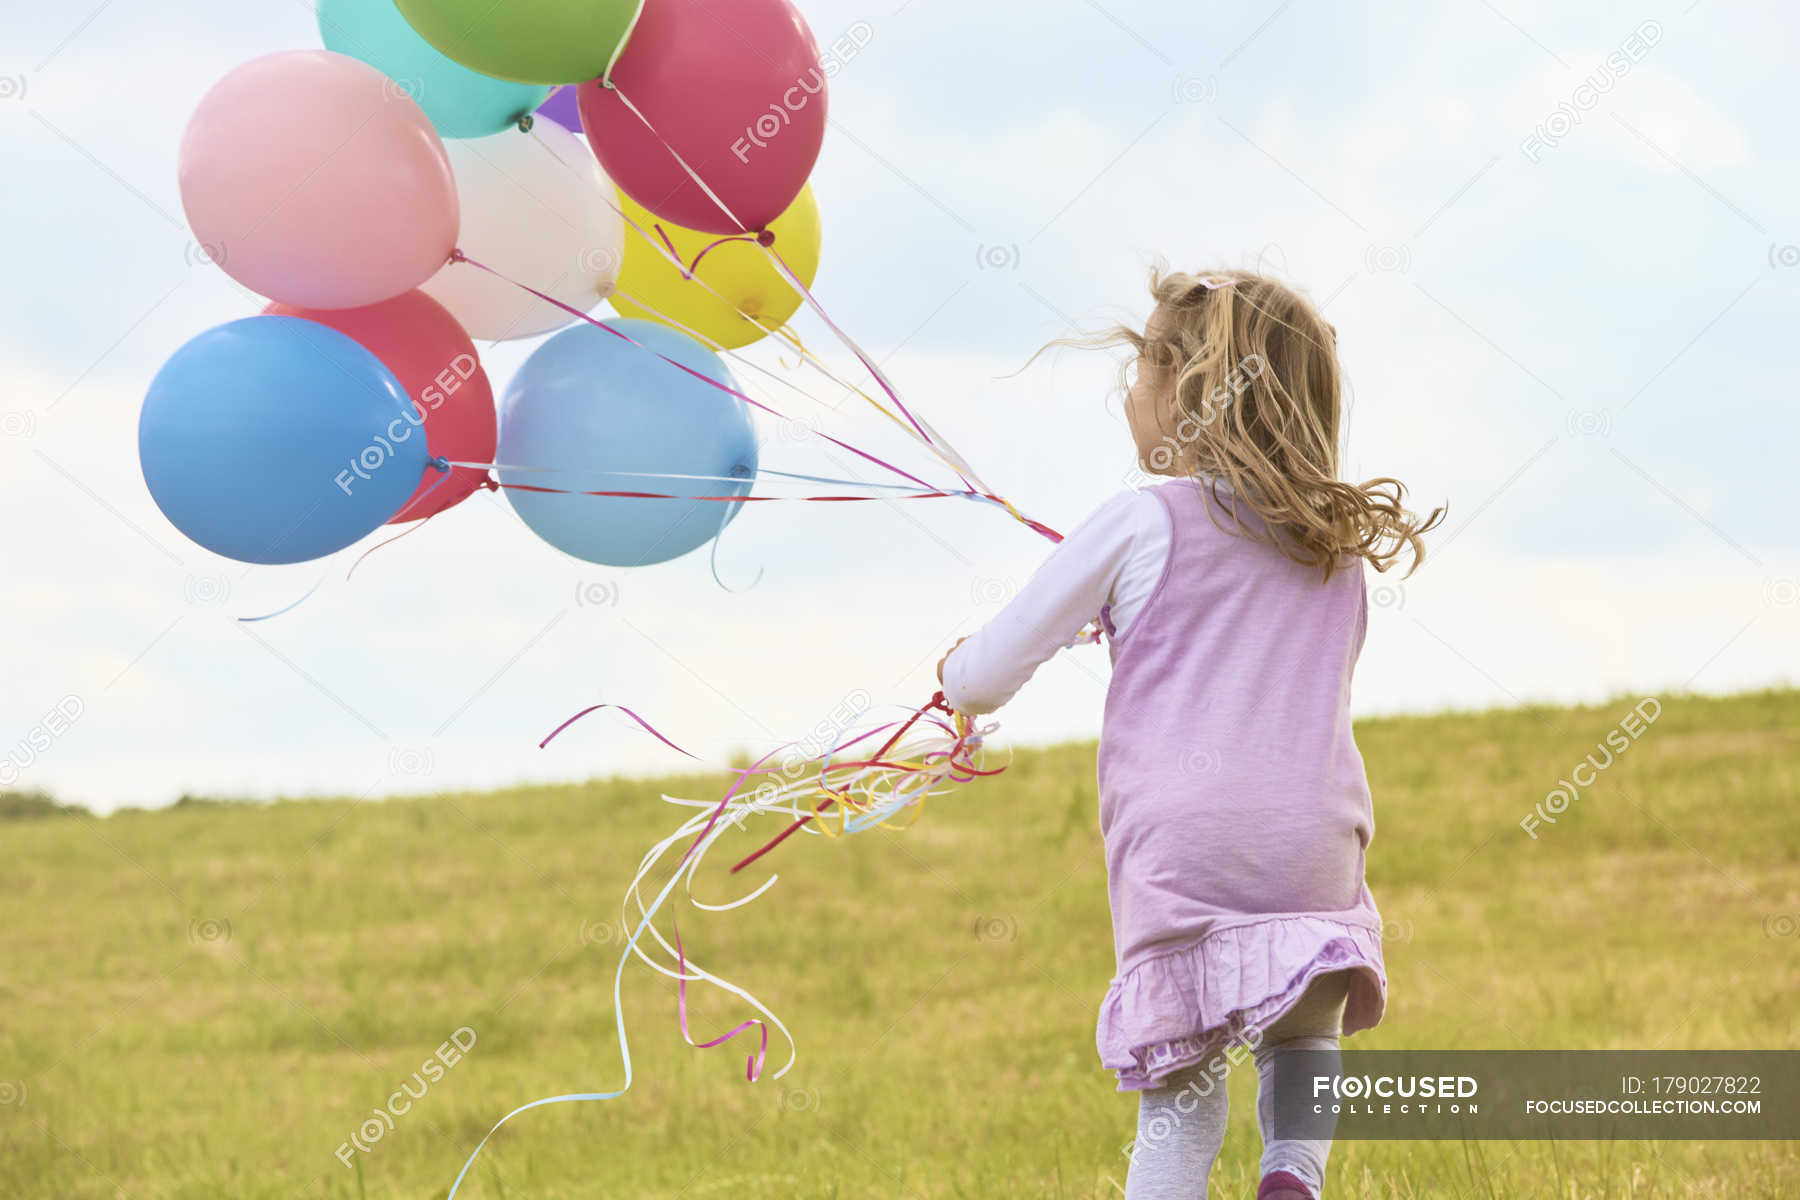 Brandewijn propeller tekort Little girl with balloons running on a meadow — blond, 4 5 Years - Stock  Photo | #179027822